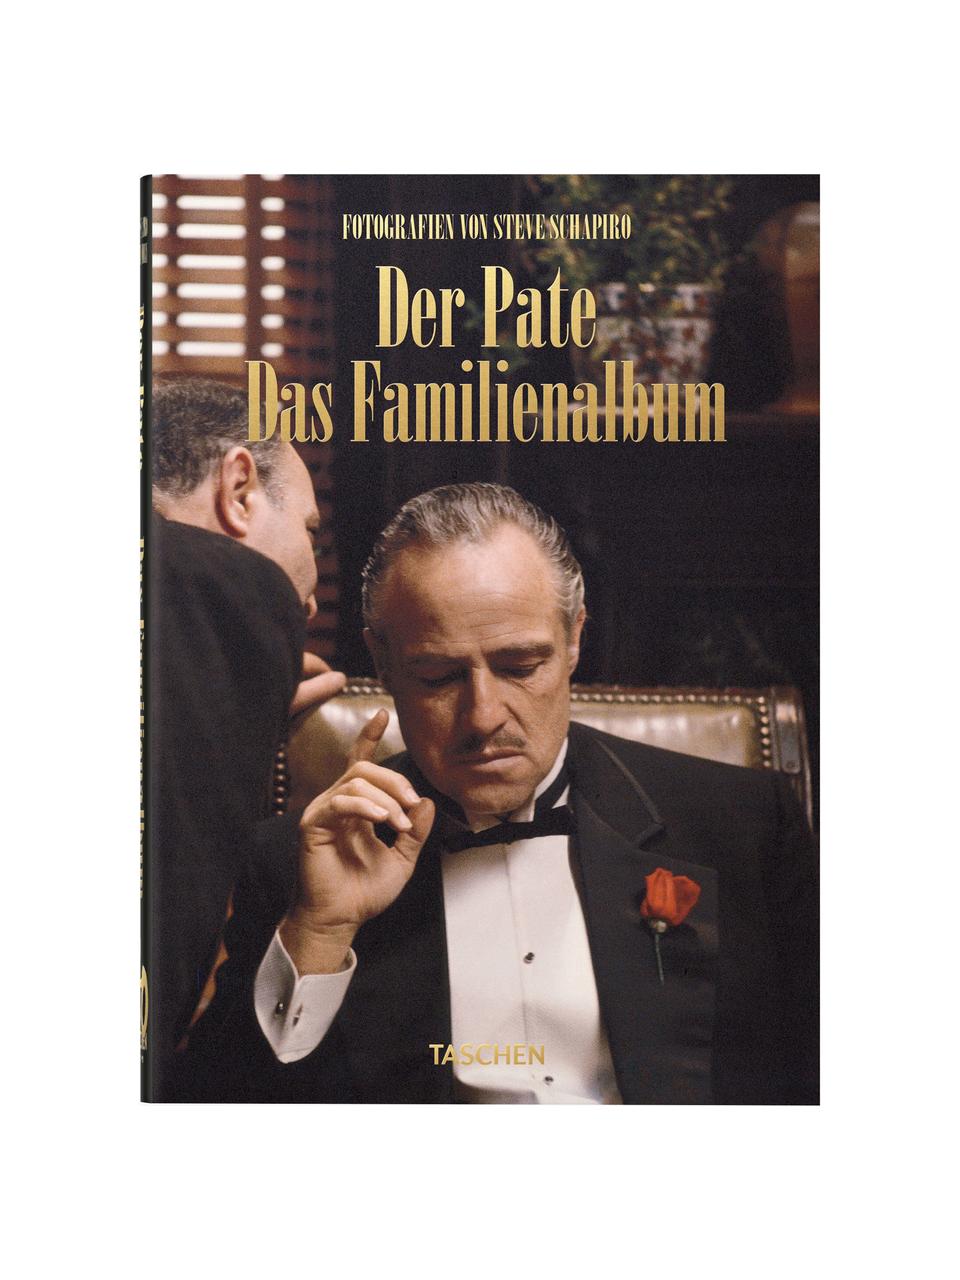 Libro ilustrado The Godfather. The family album, Papel, tapa dura, The Godfather. The family album, An 16 x Al 22 cm